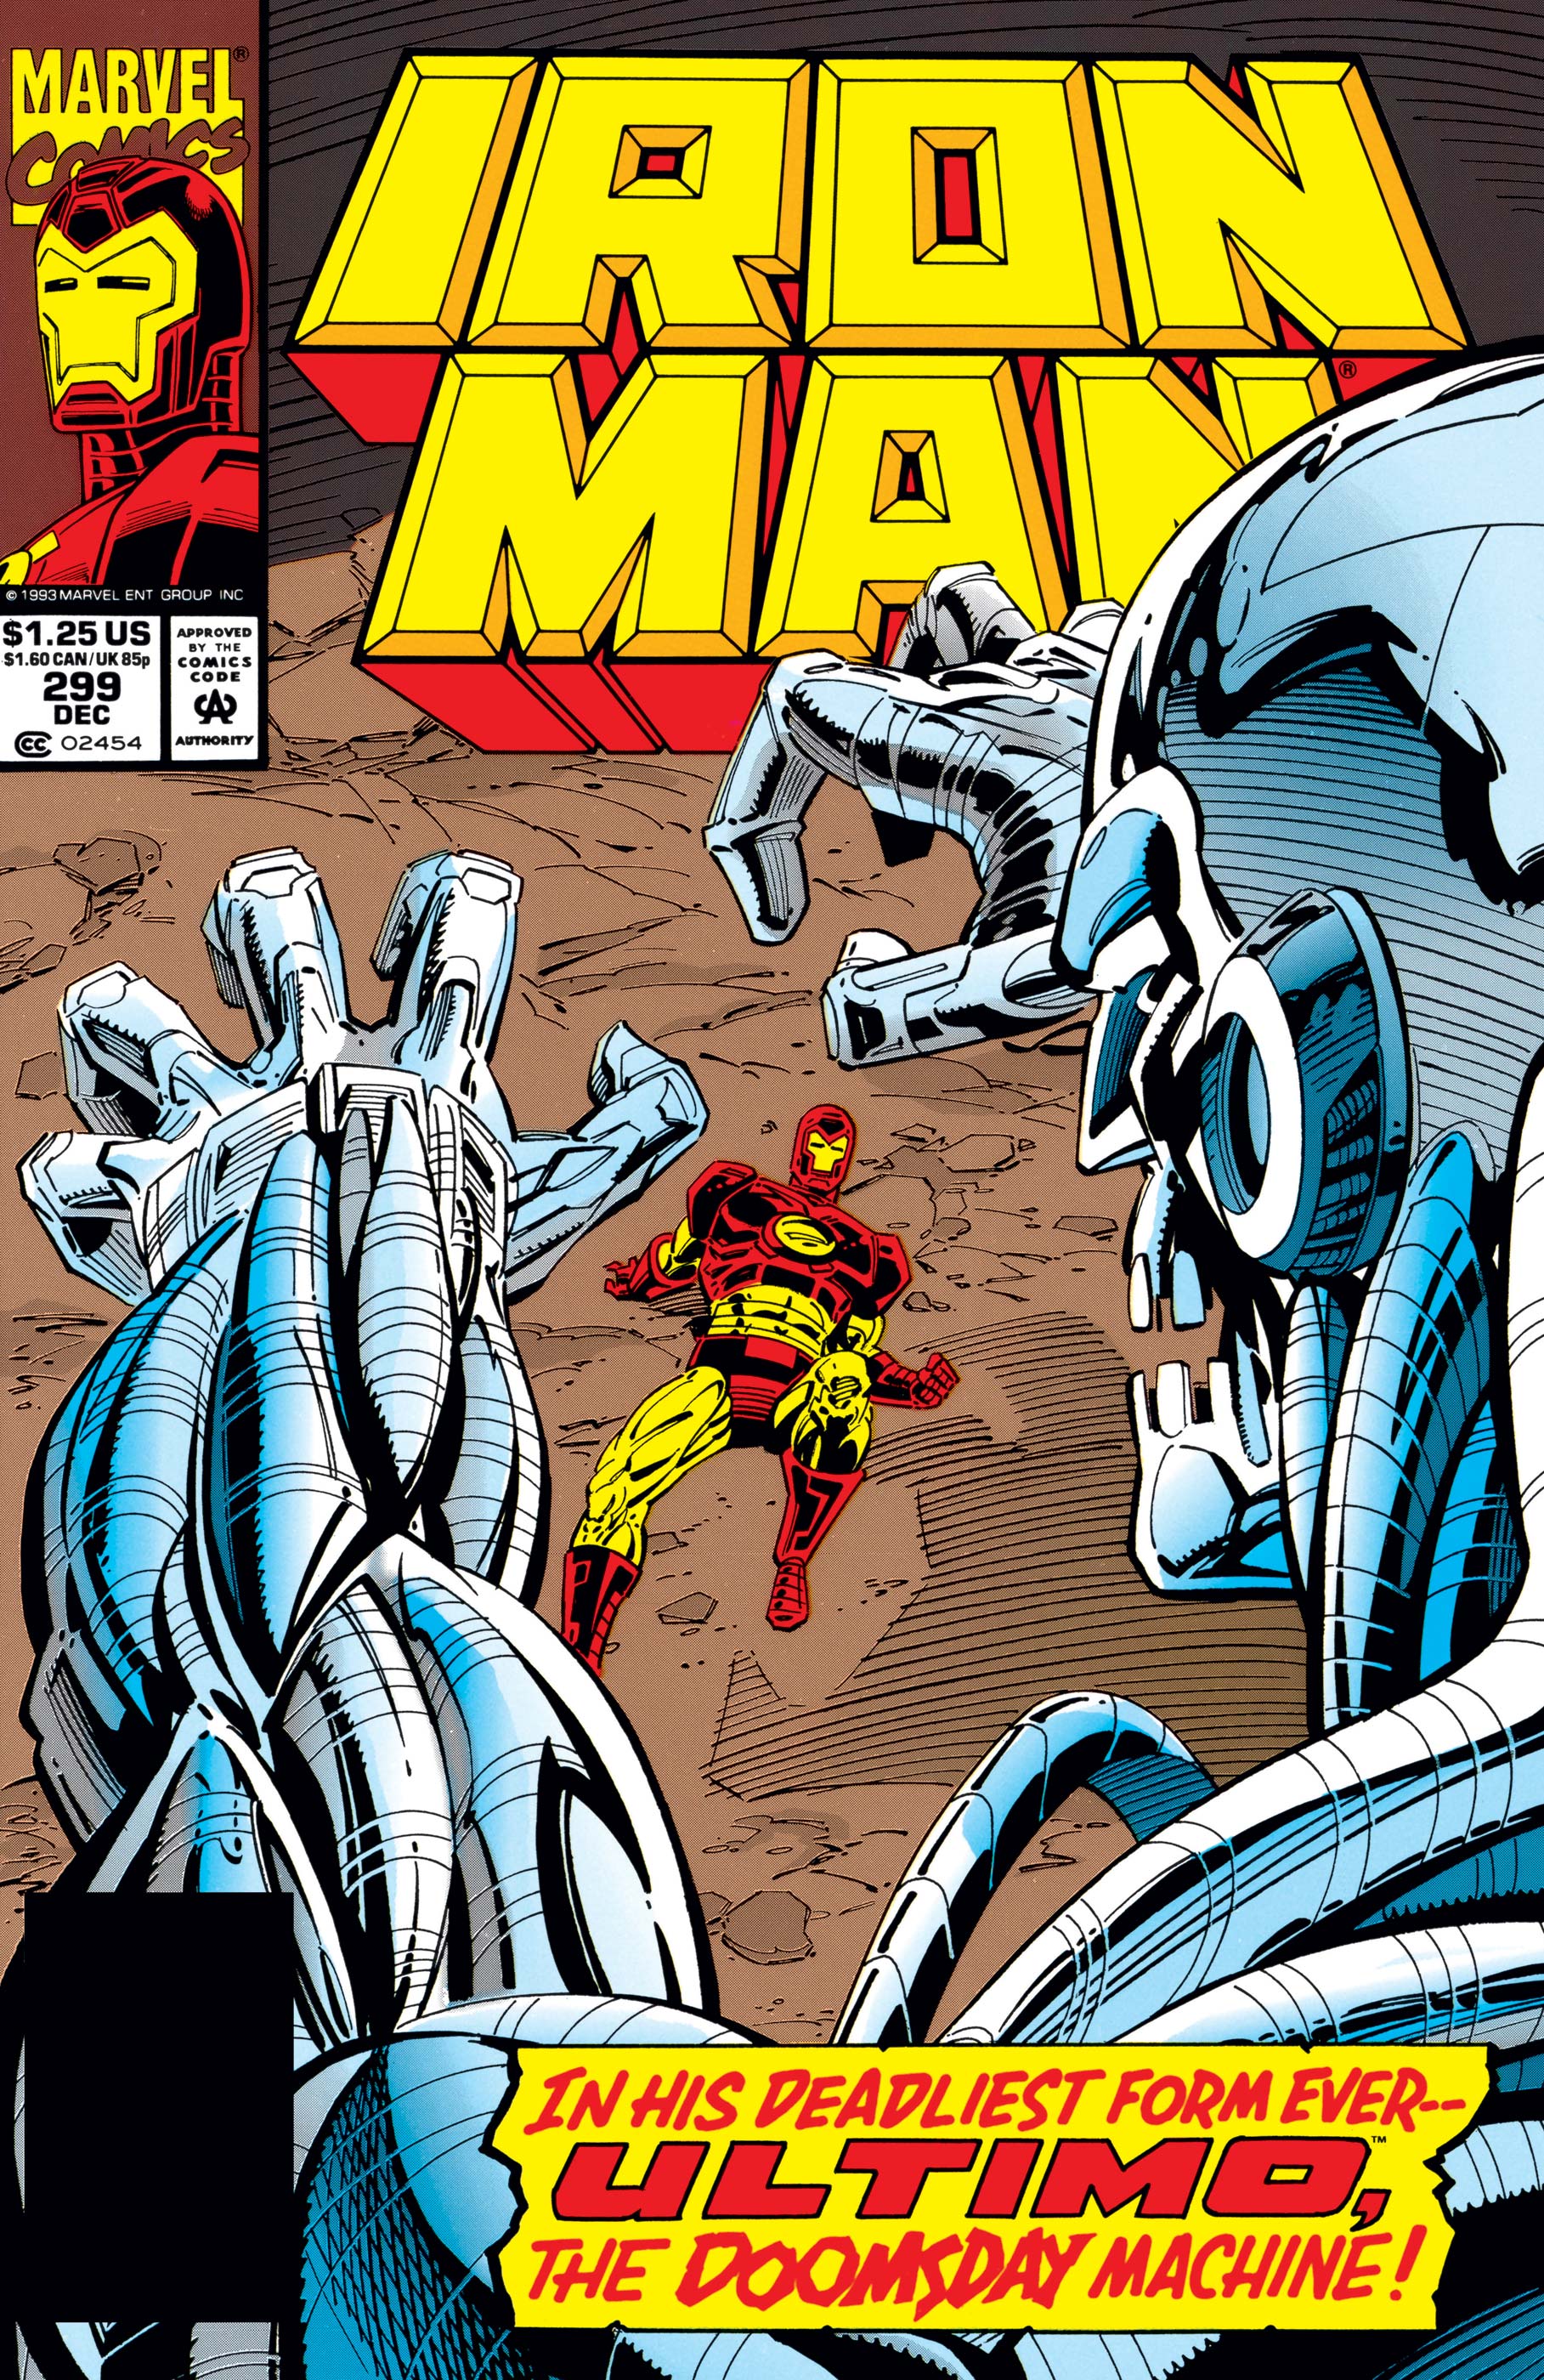 Iron Man (1968) #299